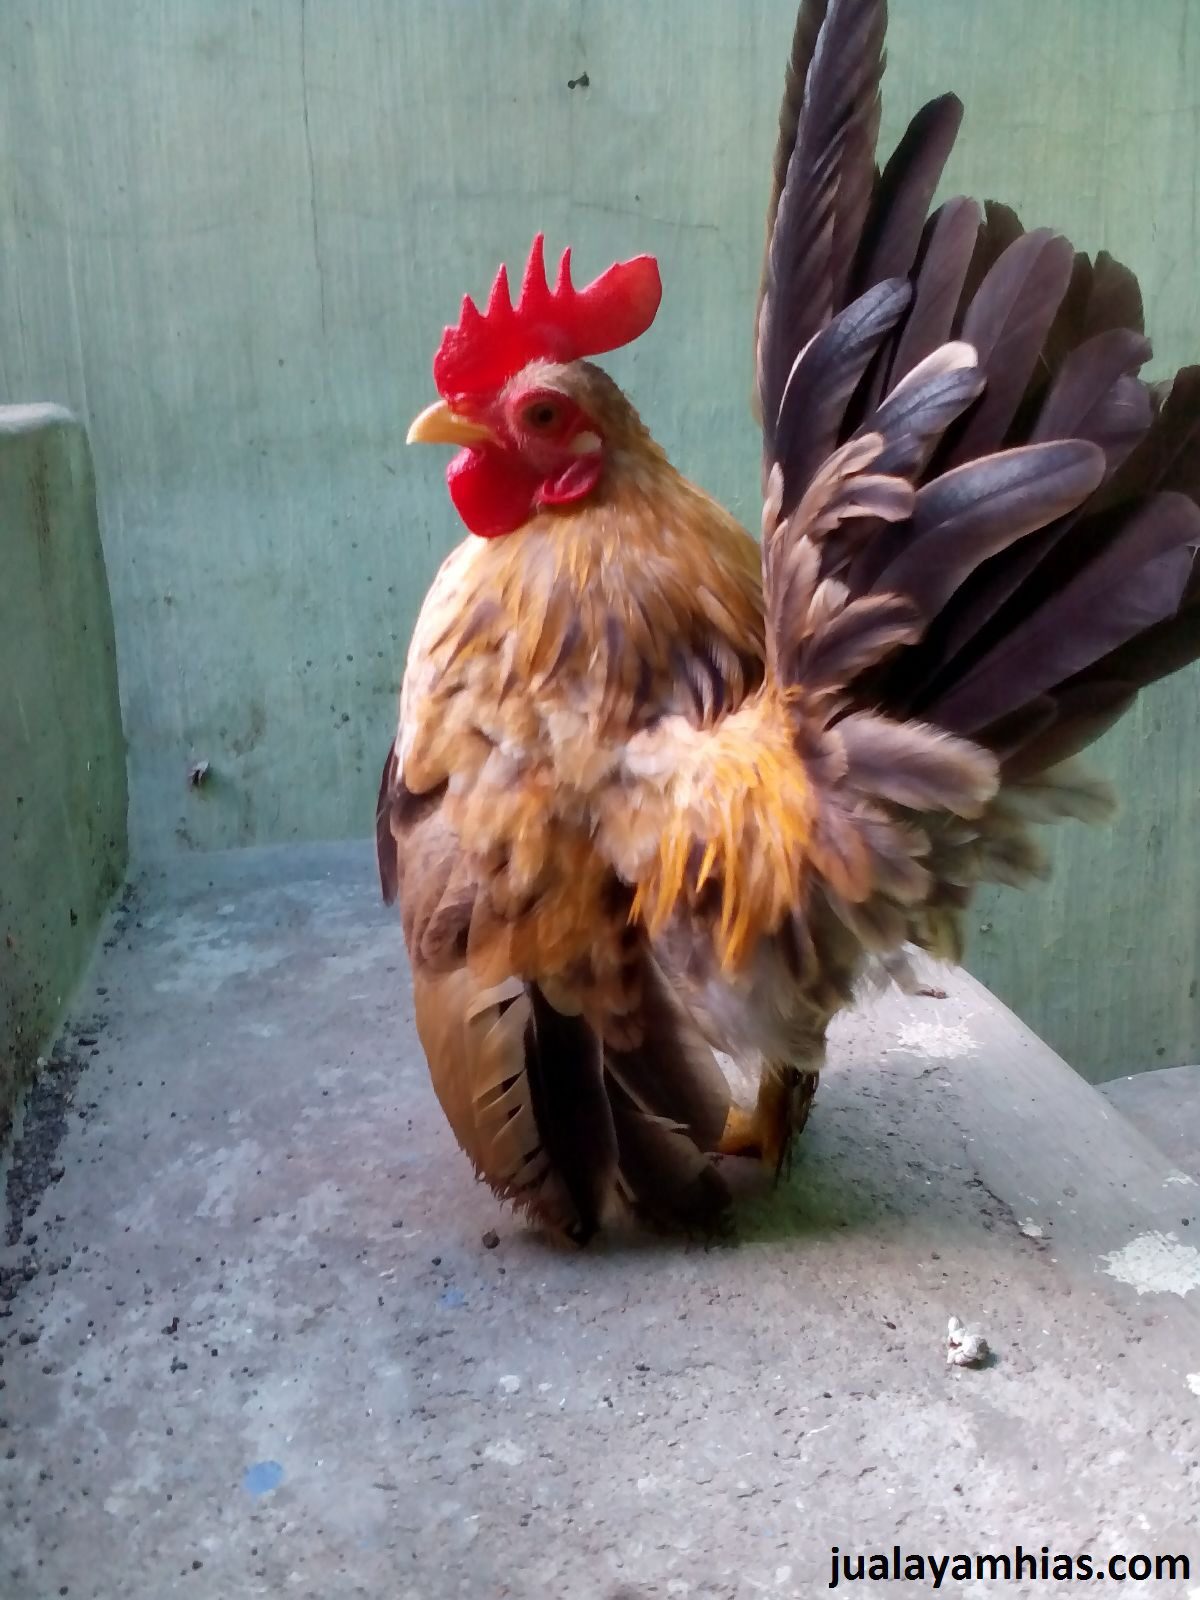 Ayam Serama Dewasa 22 1 Pengiriman Ayam Serama Pesanan Pak Karman di Martapura Jual Ayam Hias HP : 08564 77 23 888 | BERKUALITAS DAN TERPERCAYA Pengiriman Ayam Serama Pesanan Pak Karman di Martapura Pengiriman Ayam Serama Pesanan Pak Karman di Martapura